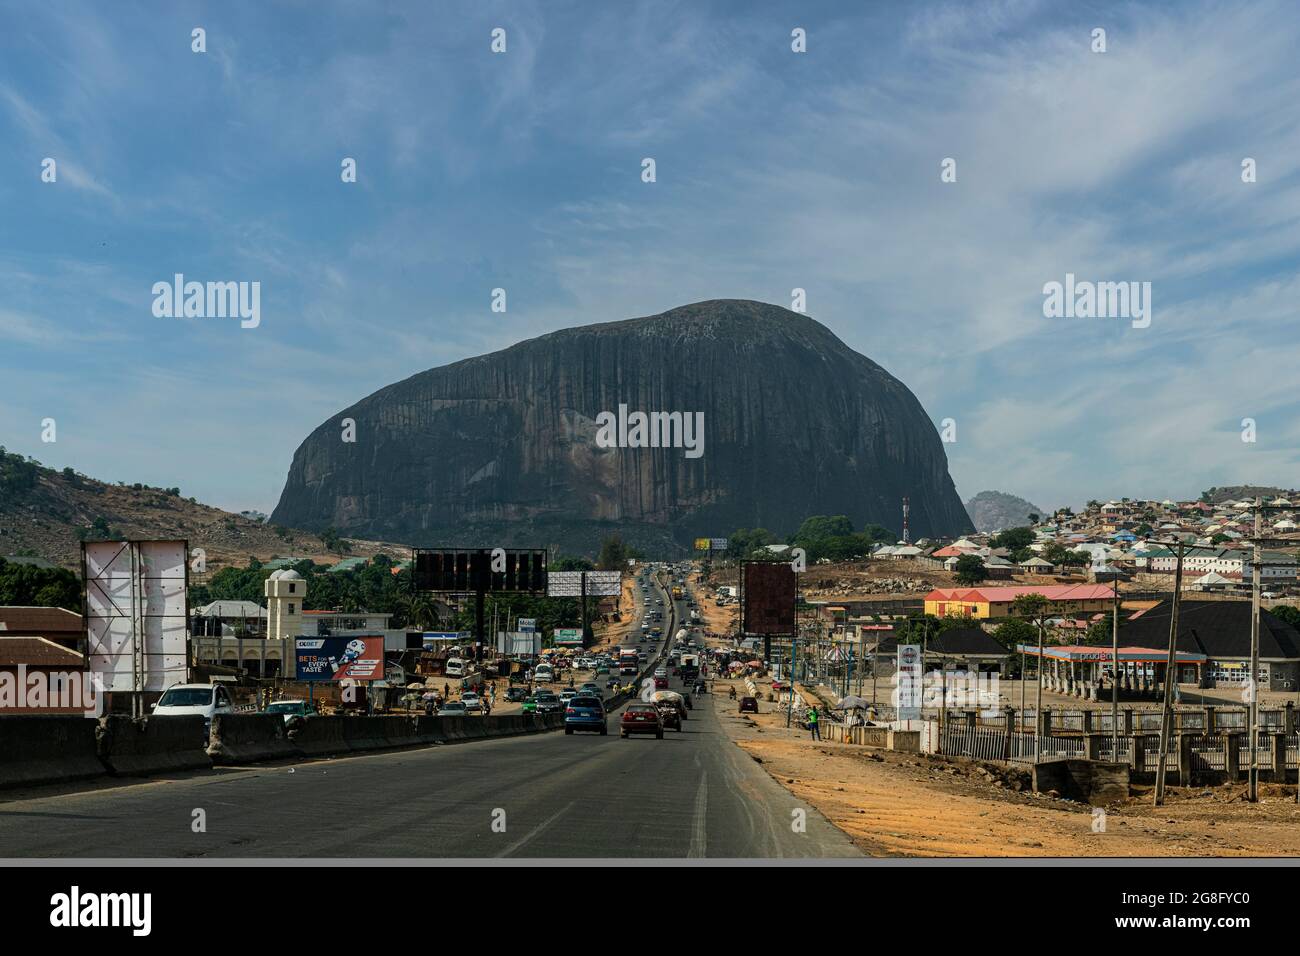 Zuma rock, Abuja, Nigeria, West Africa, Africa Stock Photo